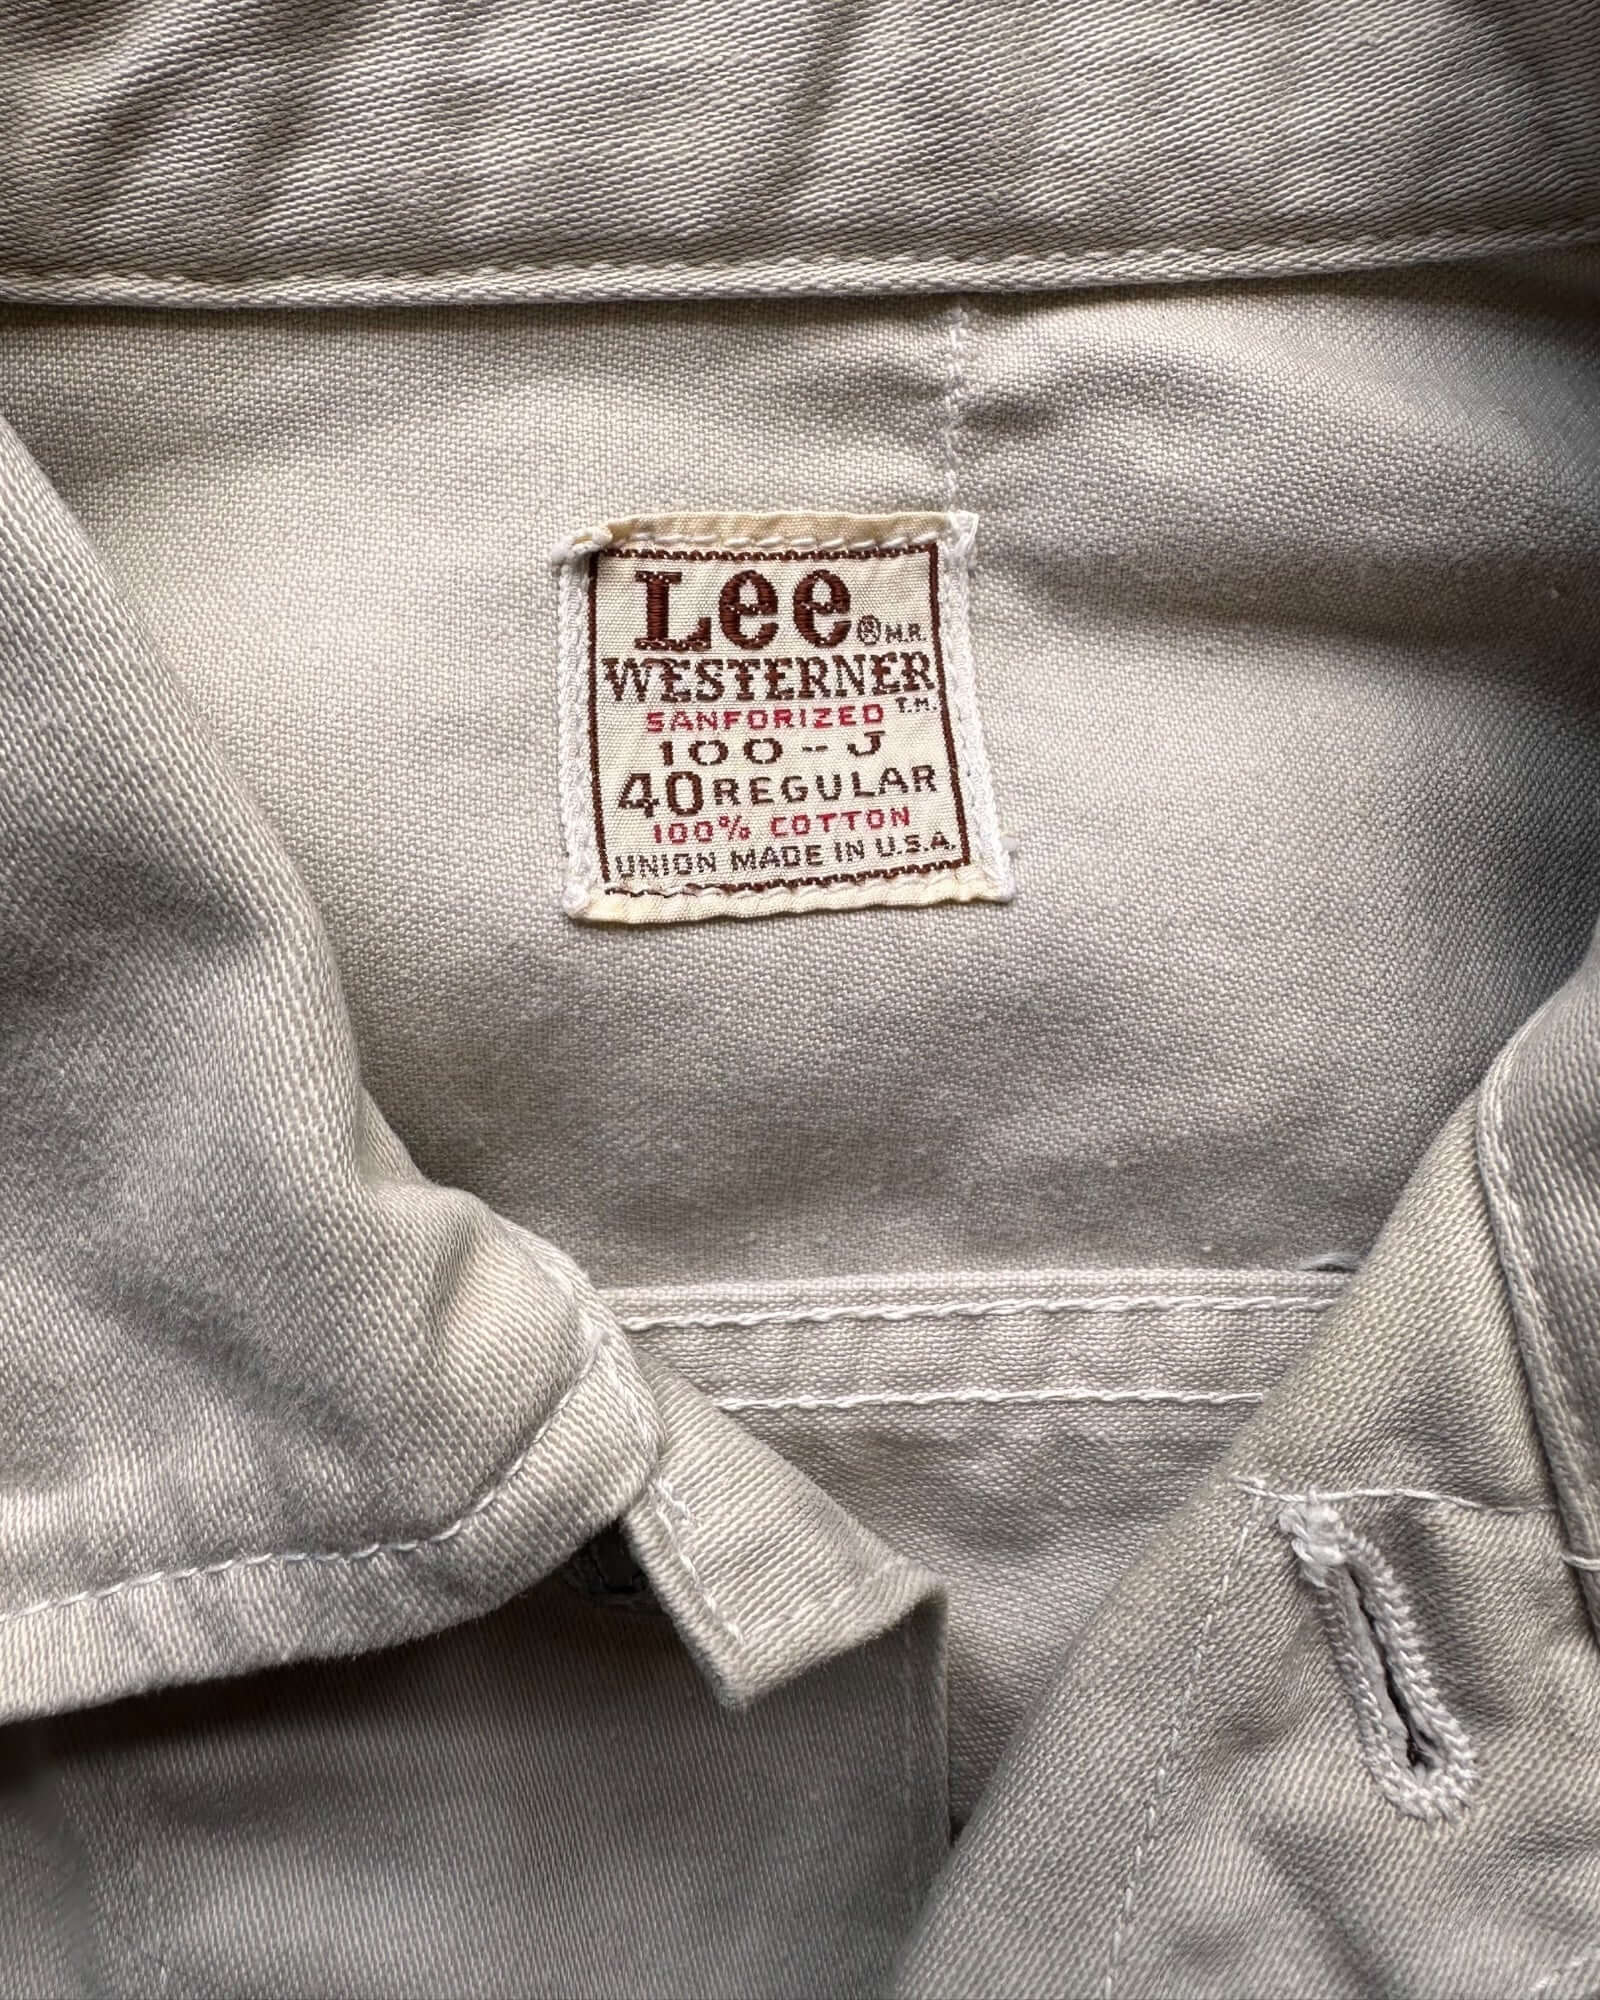 Tag Close Up View on Vintage Lee Westerner Jacket SZ 40 | Vintage Lee 100-J Denim Workwear Seattle | Seattle Vintage Denim